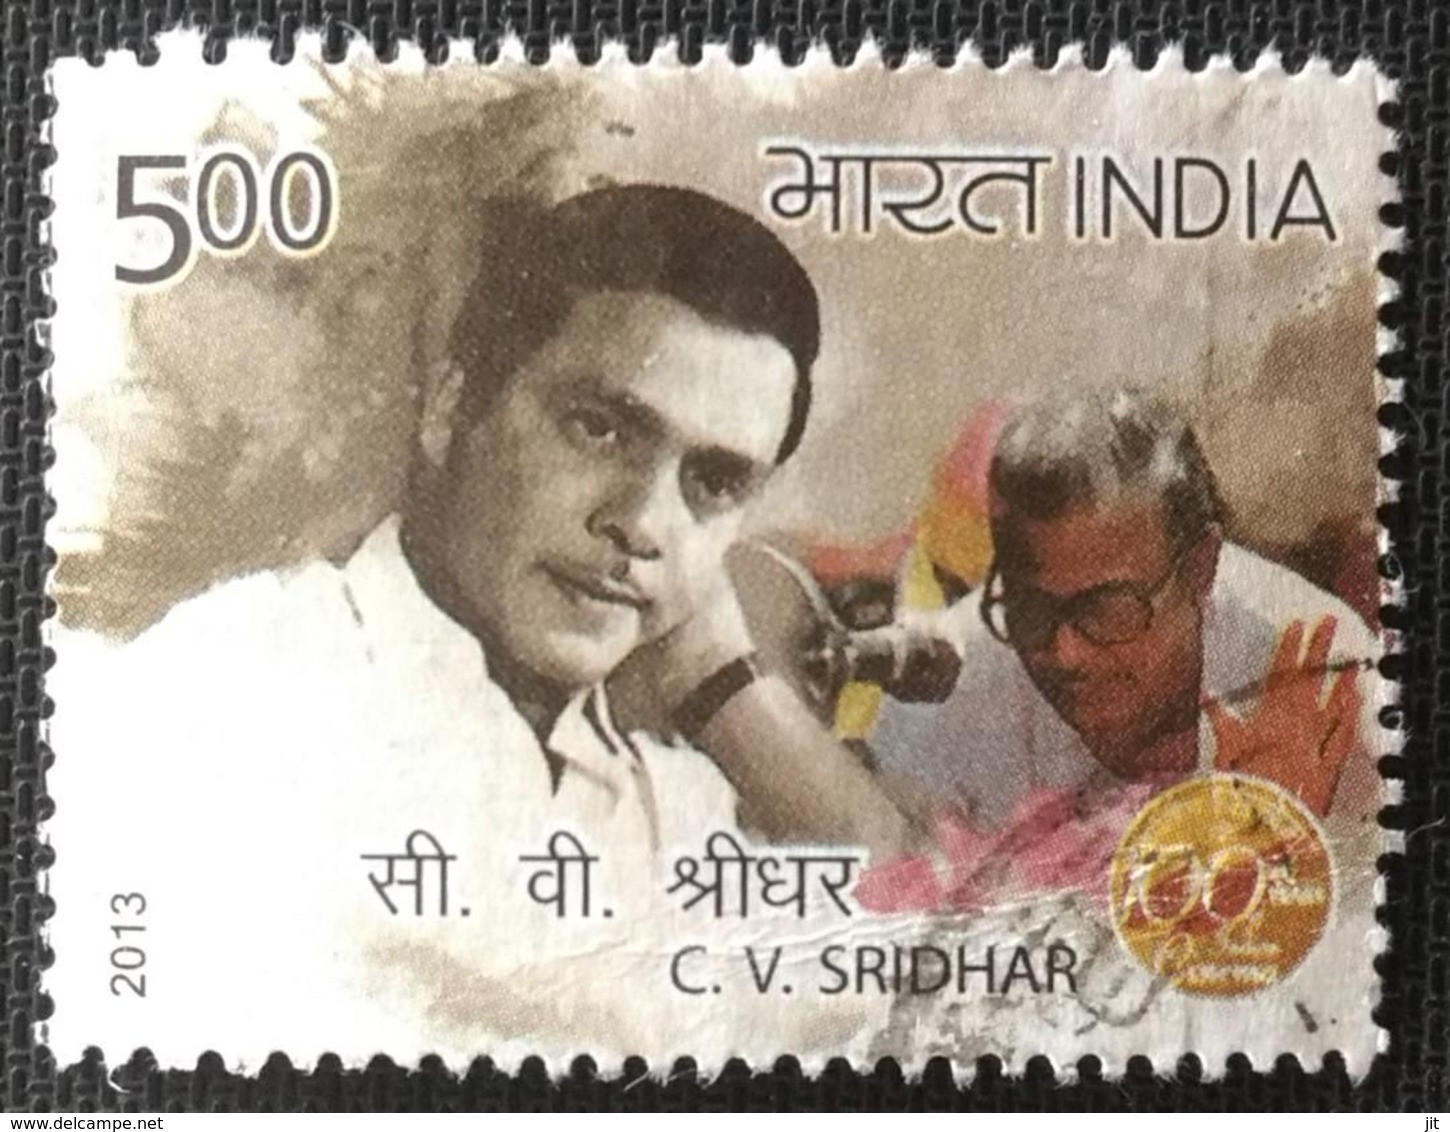 INDIA 2013 USED STAMP 100 YEARS OF INDIAN CINEMA (C.V.SRIDHAR) - Oblitérés